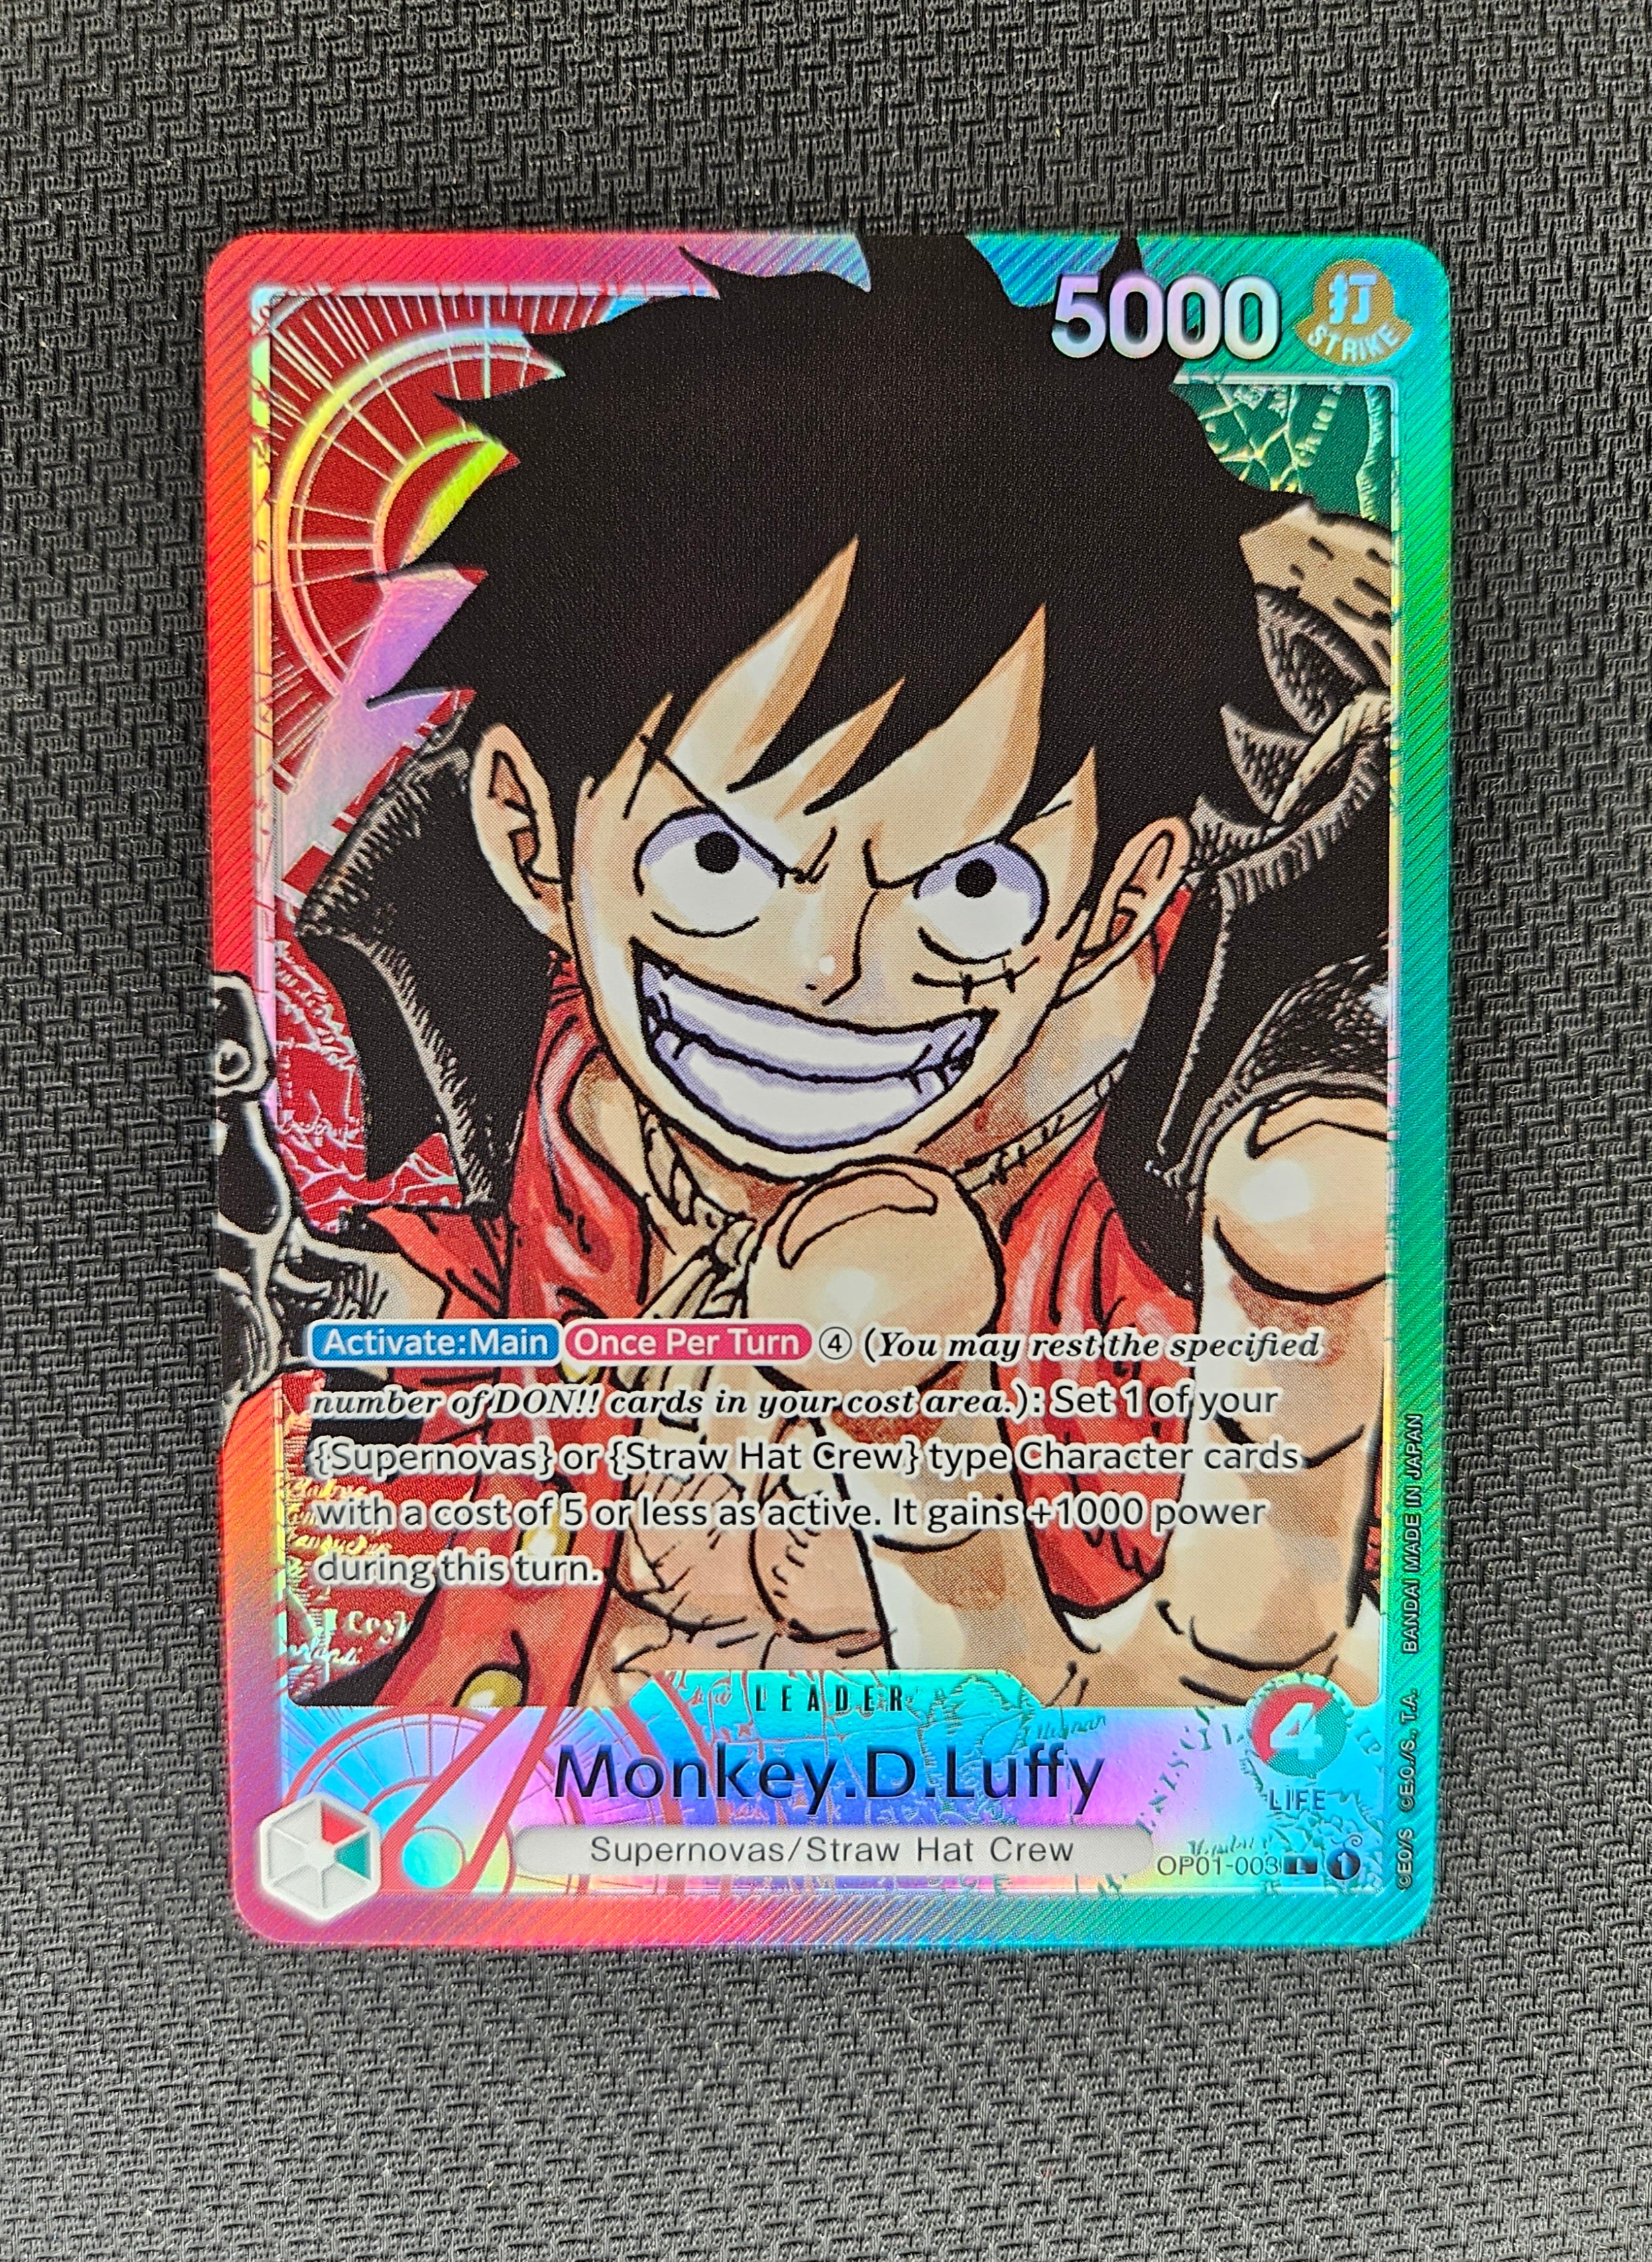 Monkey D. Luffy Art - One Piece: Romance Dawn Art Gallery